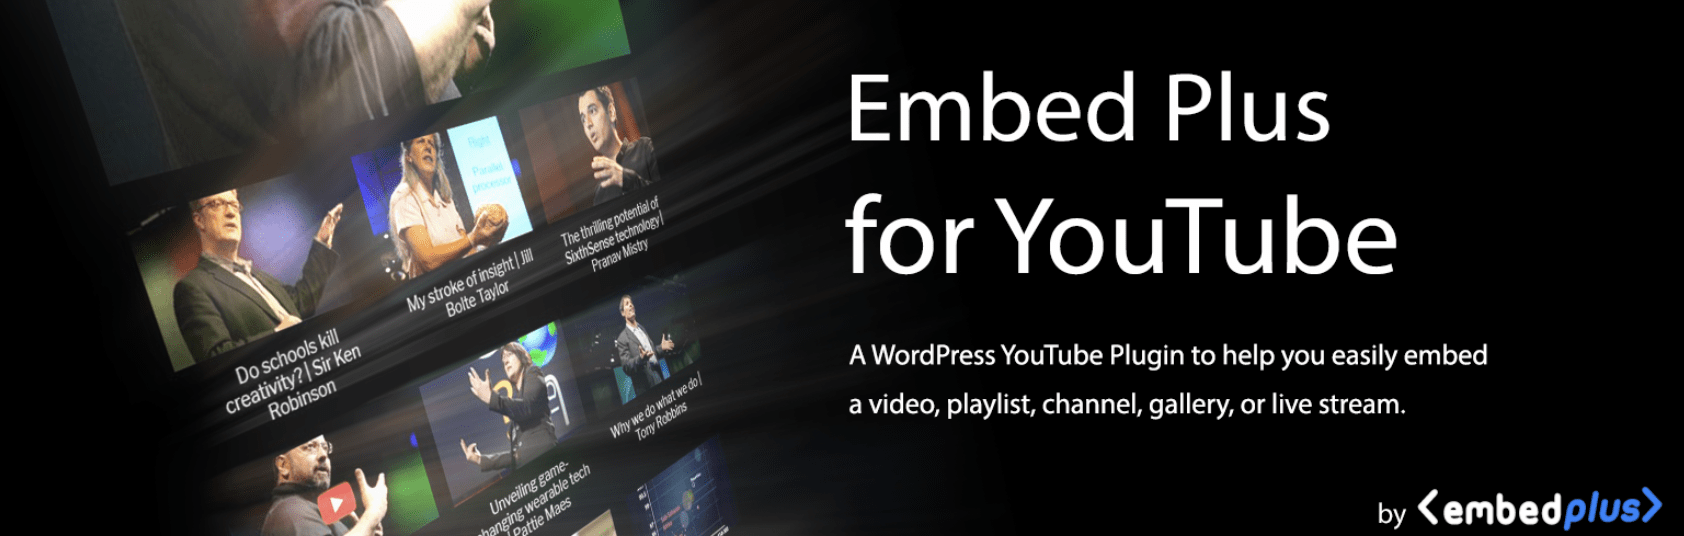 10 Best YouTube Video Gallery Plugins for WordPress